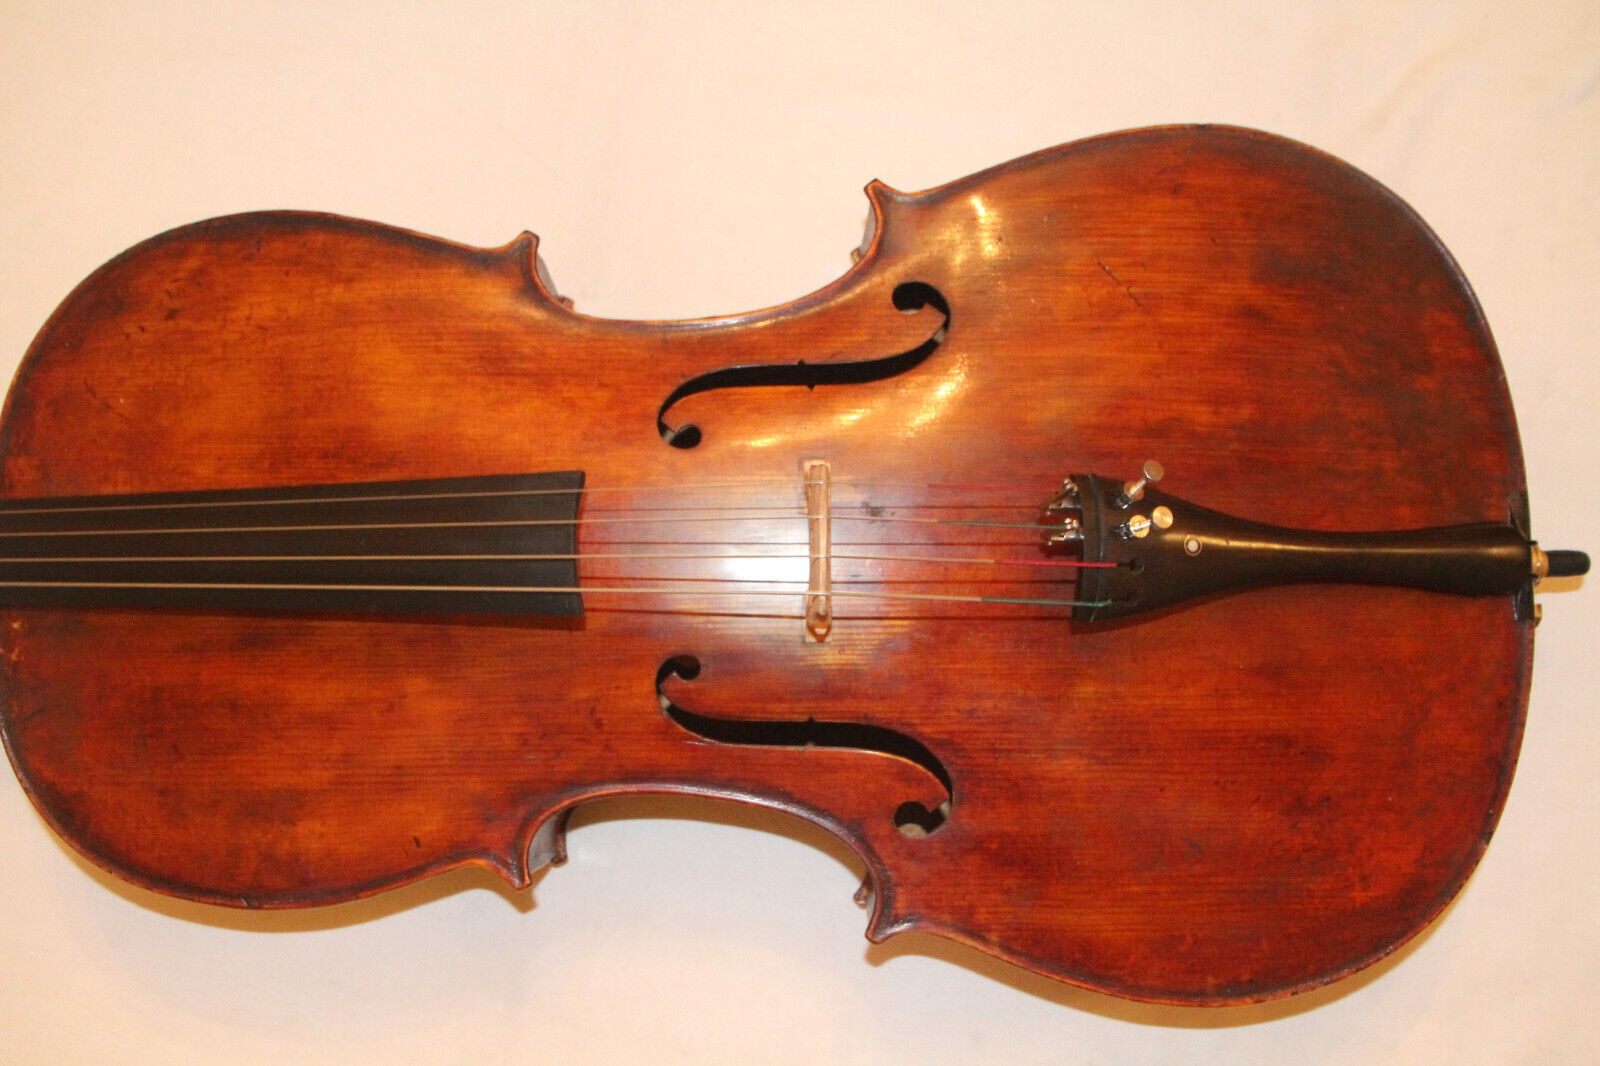 Vintage 1930 Italian cello by Lucci 4/4